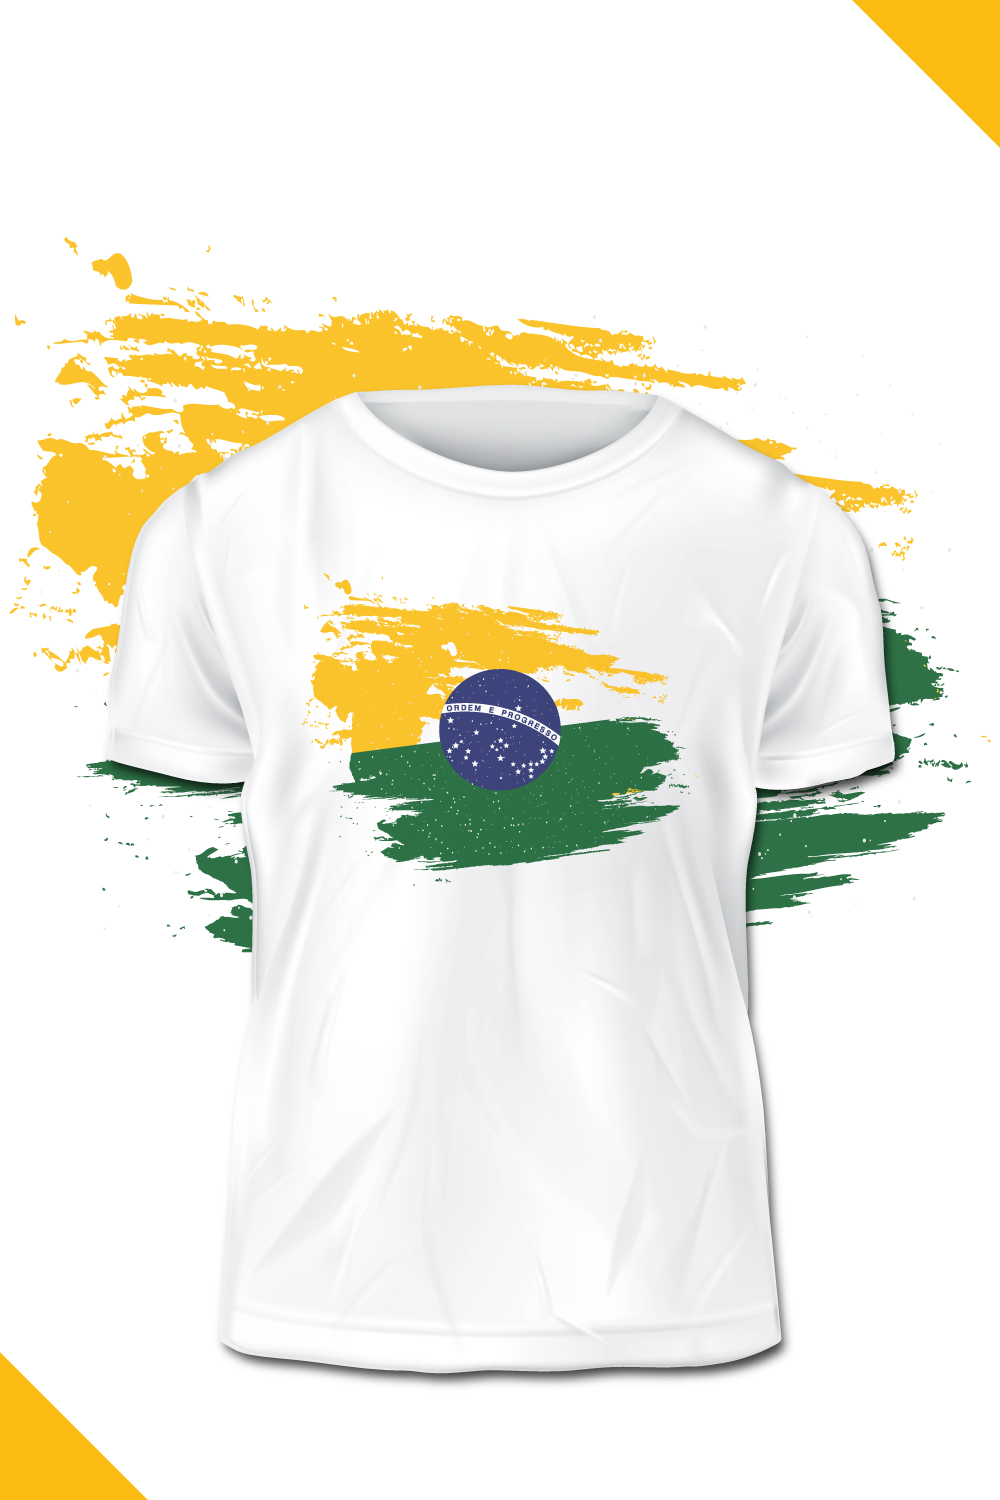 Brazil T-shirt Design pinterest preview image.